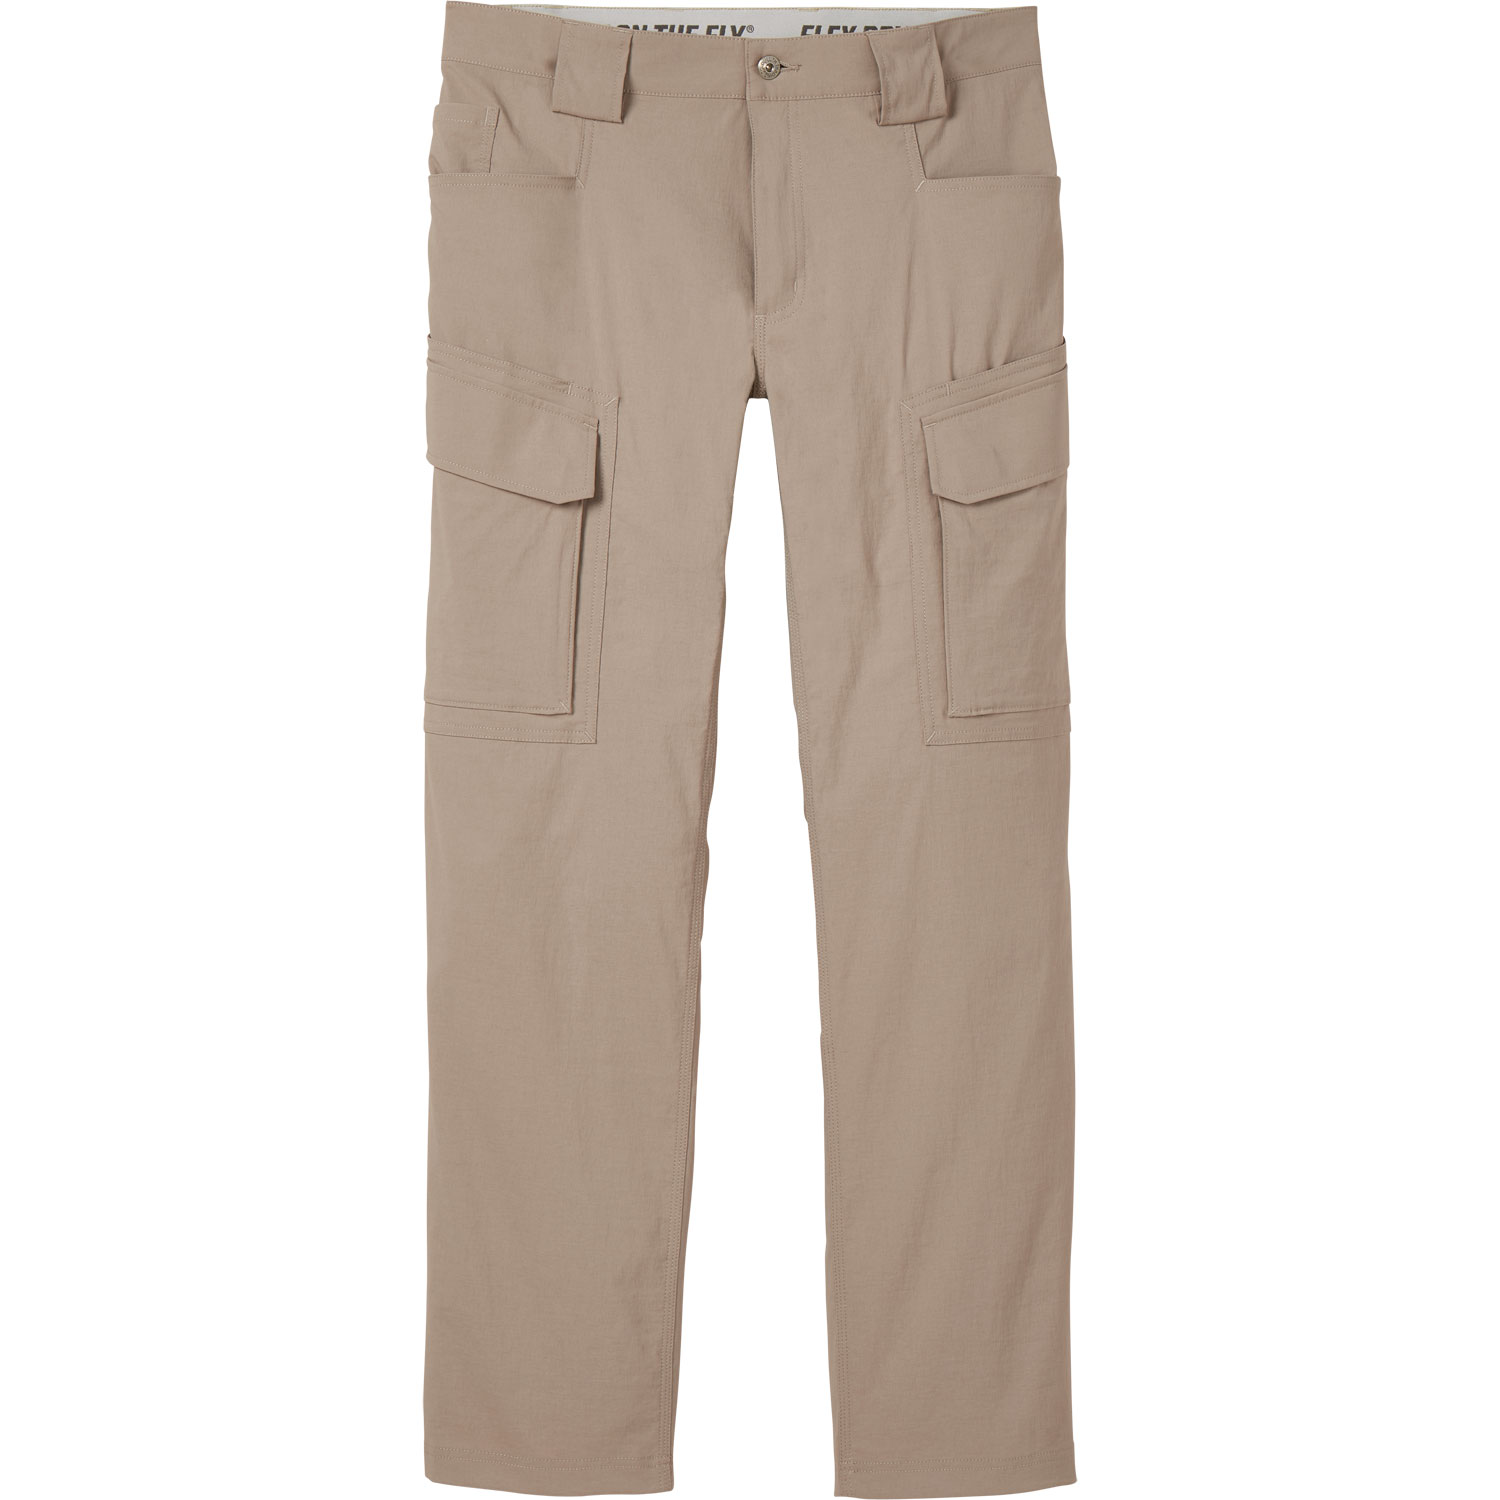 Men's DuluthFlex Dry on the Fly Fleece-Lined Cargo Pants